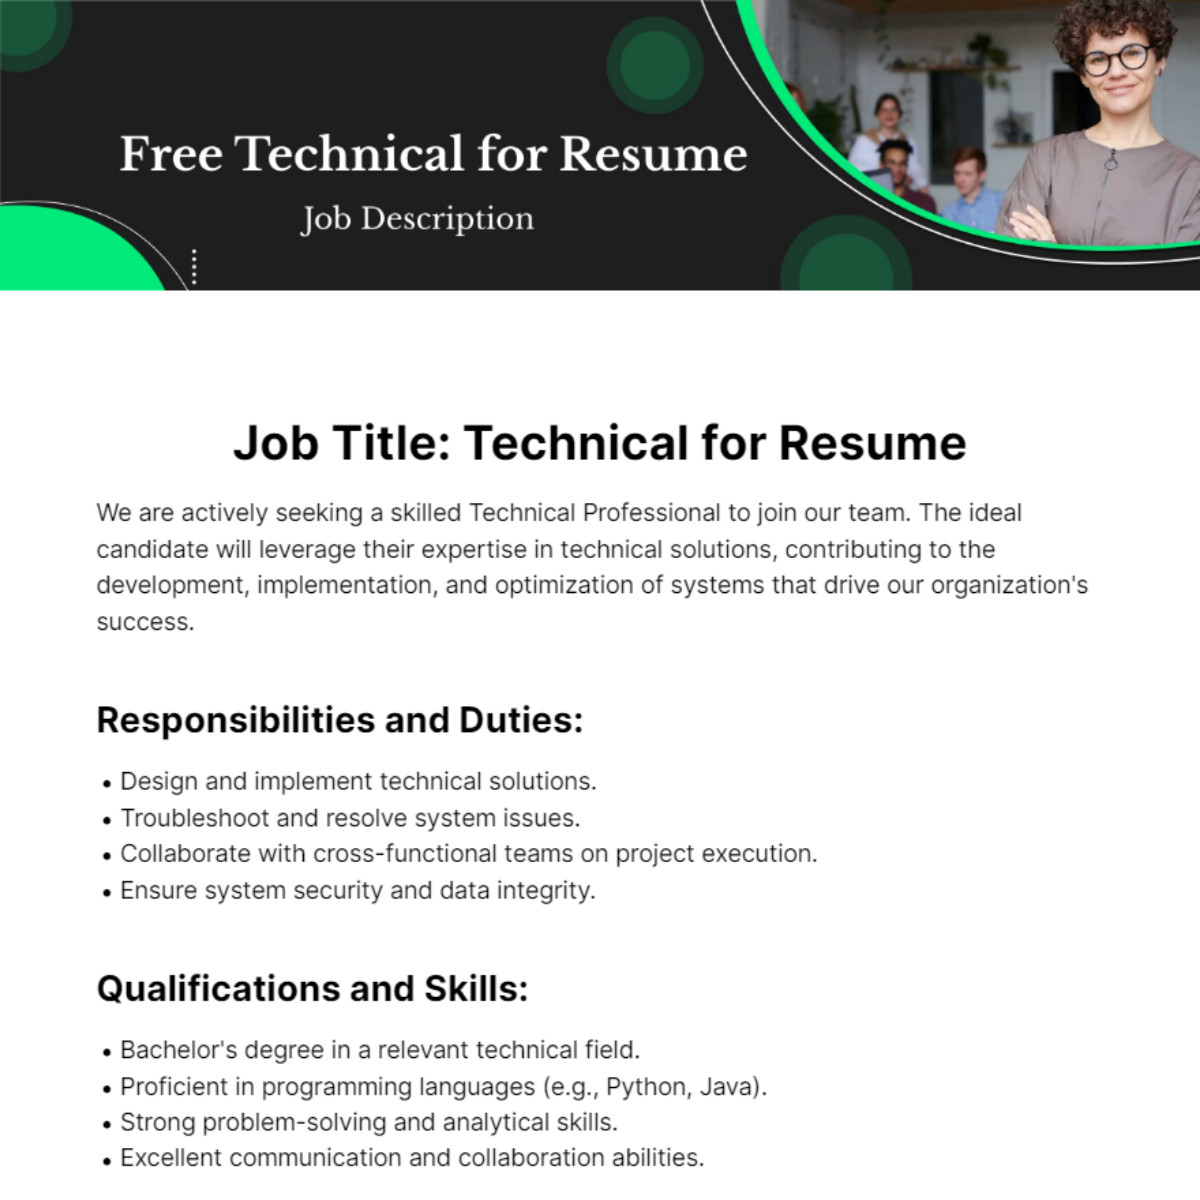 Technical Job Description for Resume Template